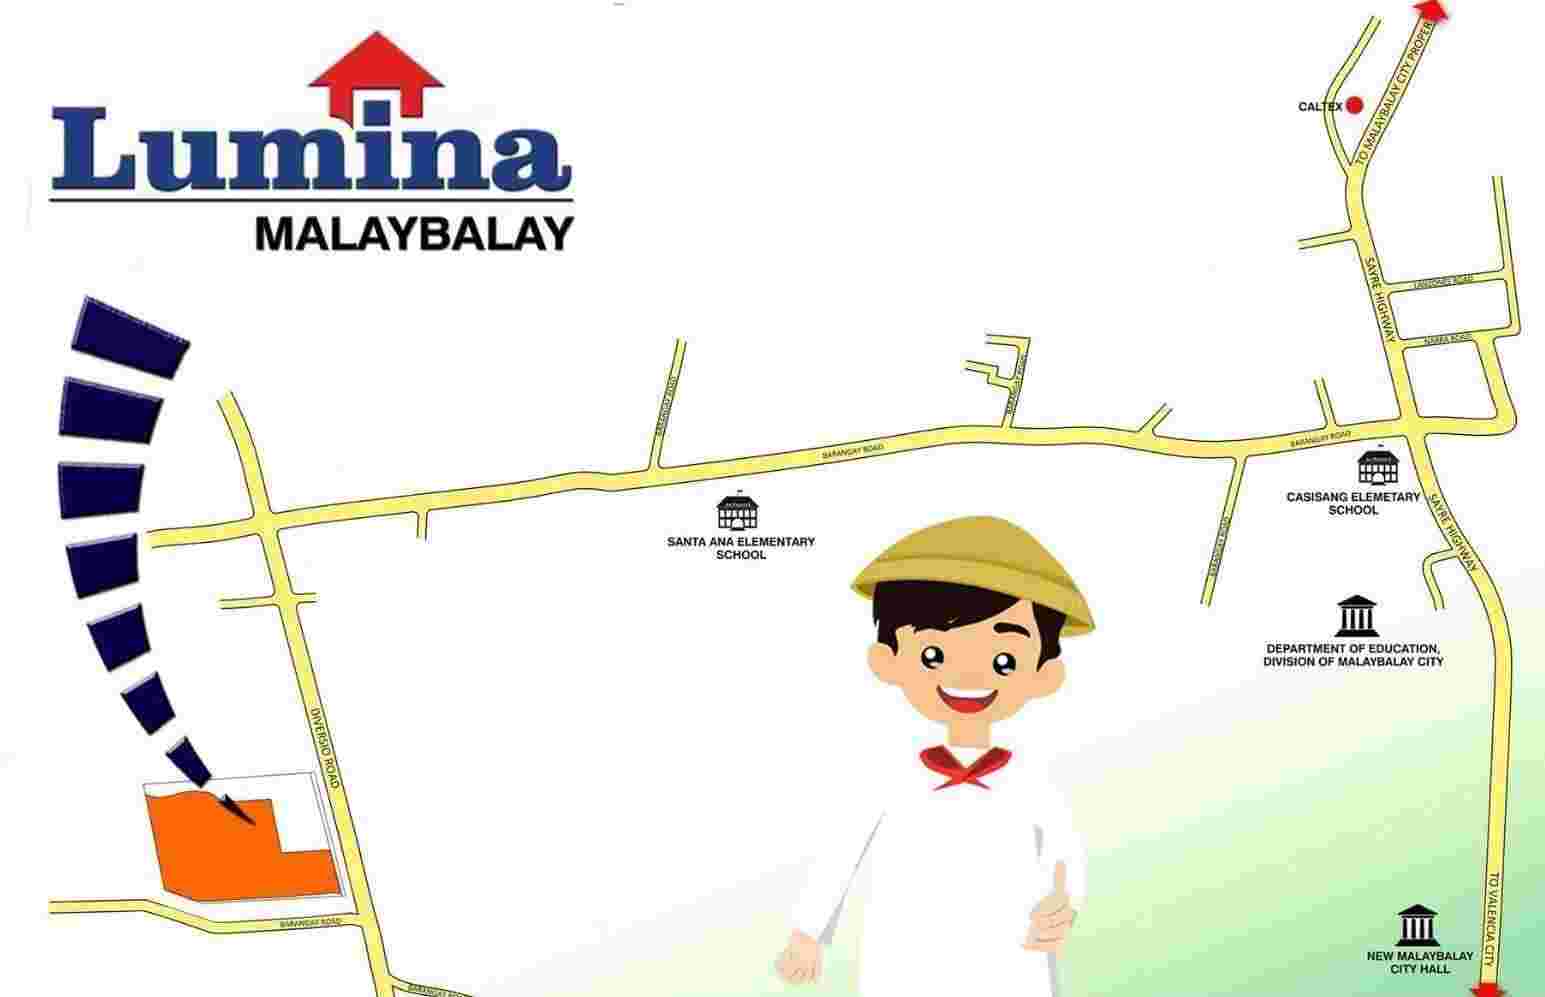 Lumina-Malaybalay-1641786553.jpg